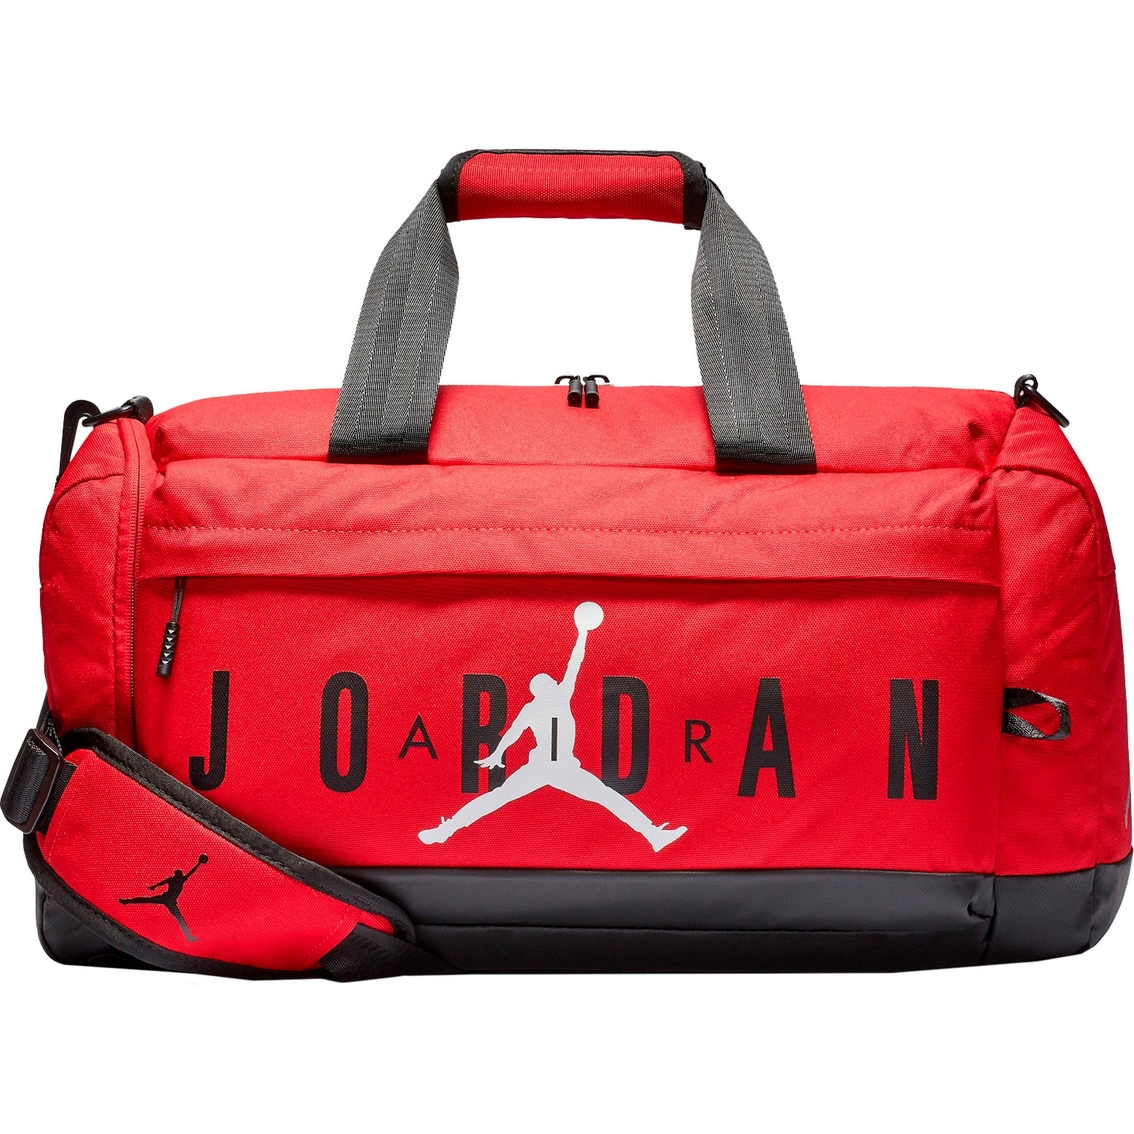 Jordan Air Jordan Duffle Bag | Travel Accessories | Clothing ...